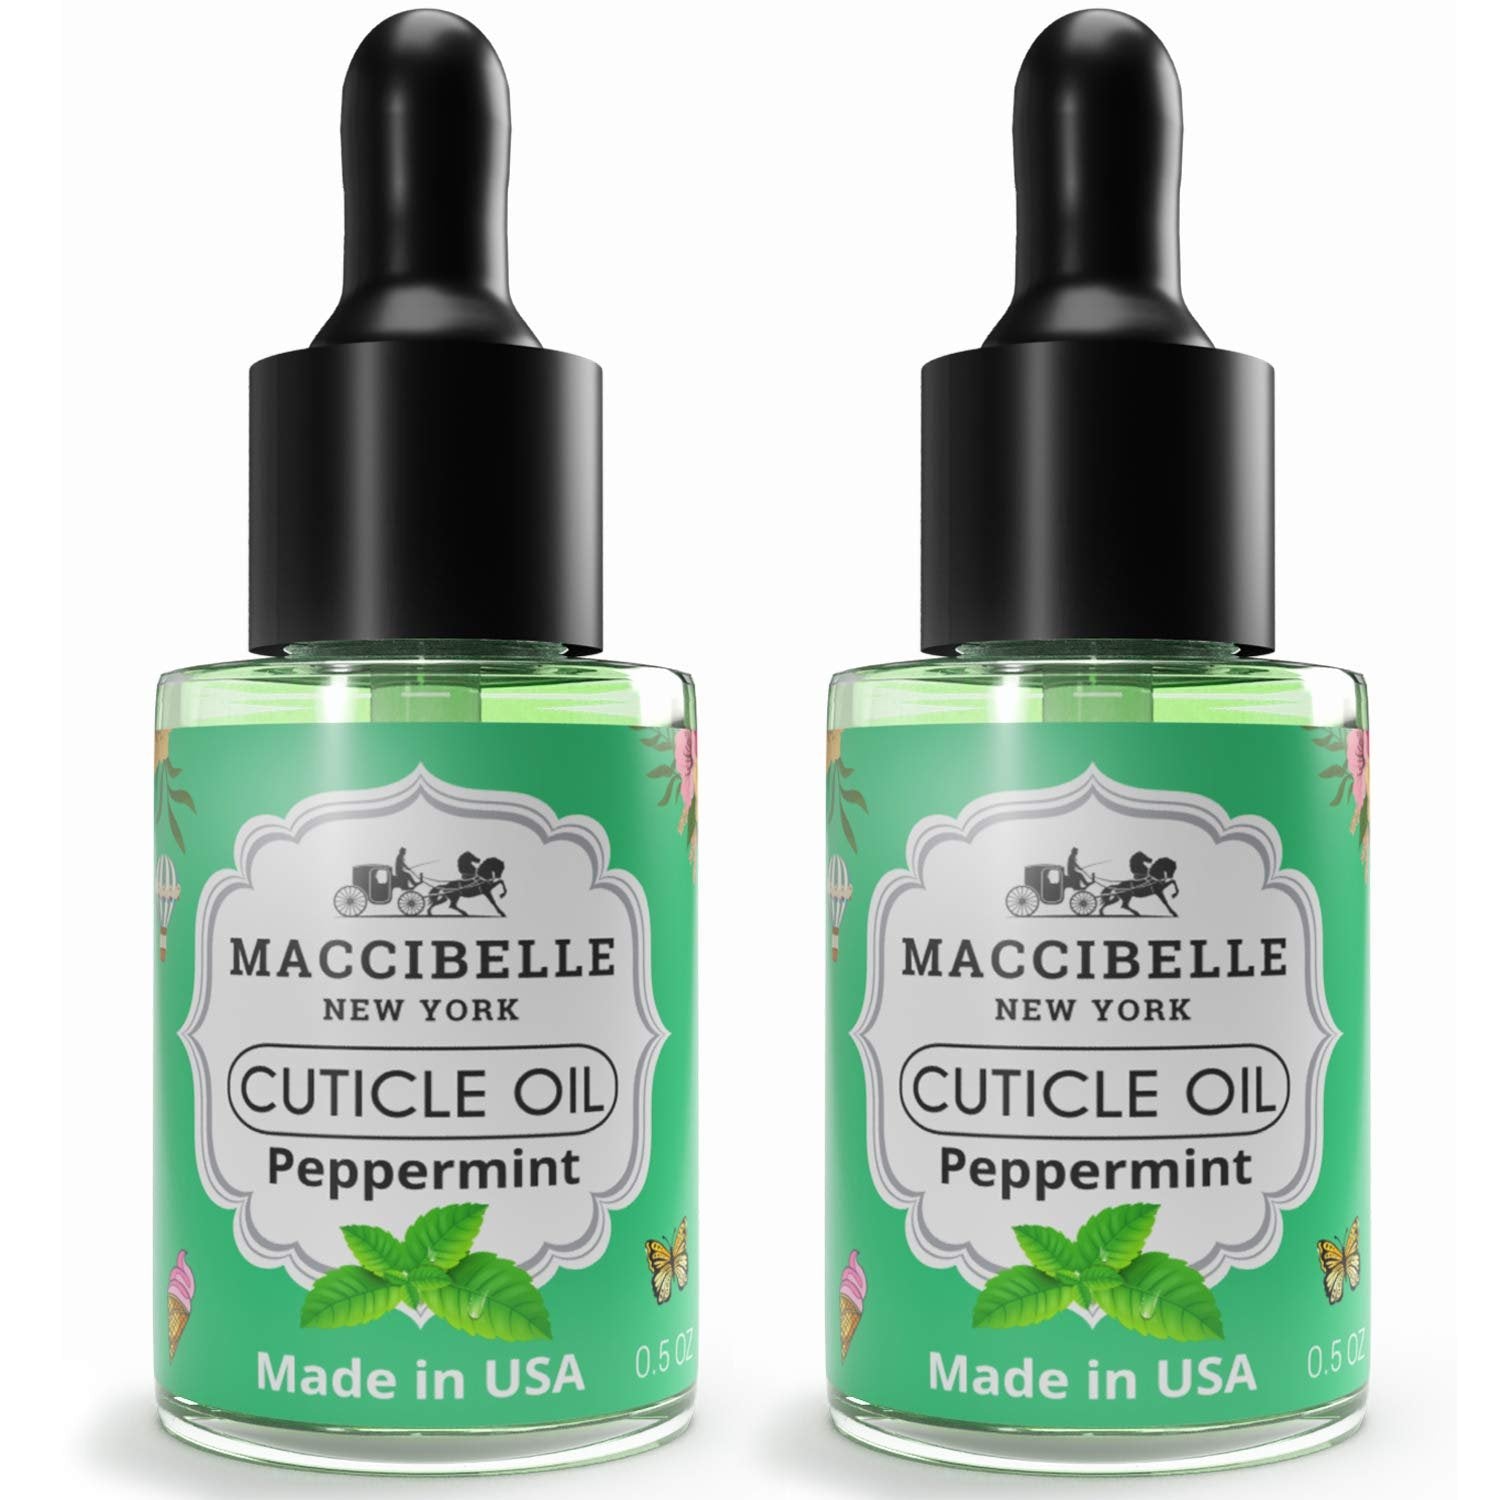 Maccibelle Cuticle Oil Heals Dry Cracked Cuticles 0.5 oz 2 Bottles (Peppermint)